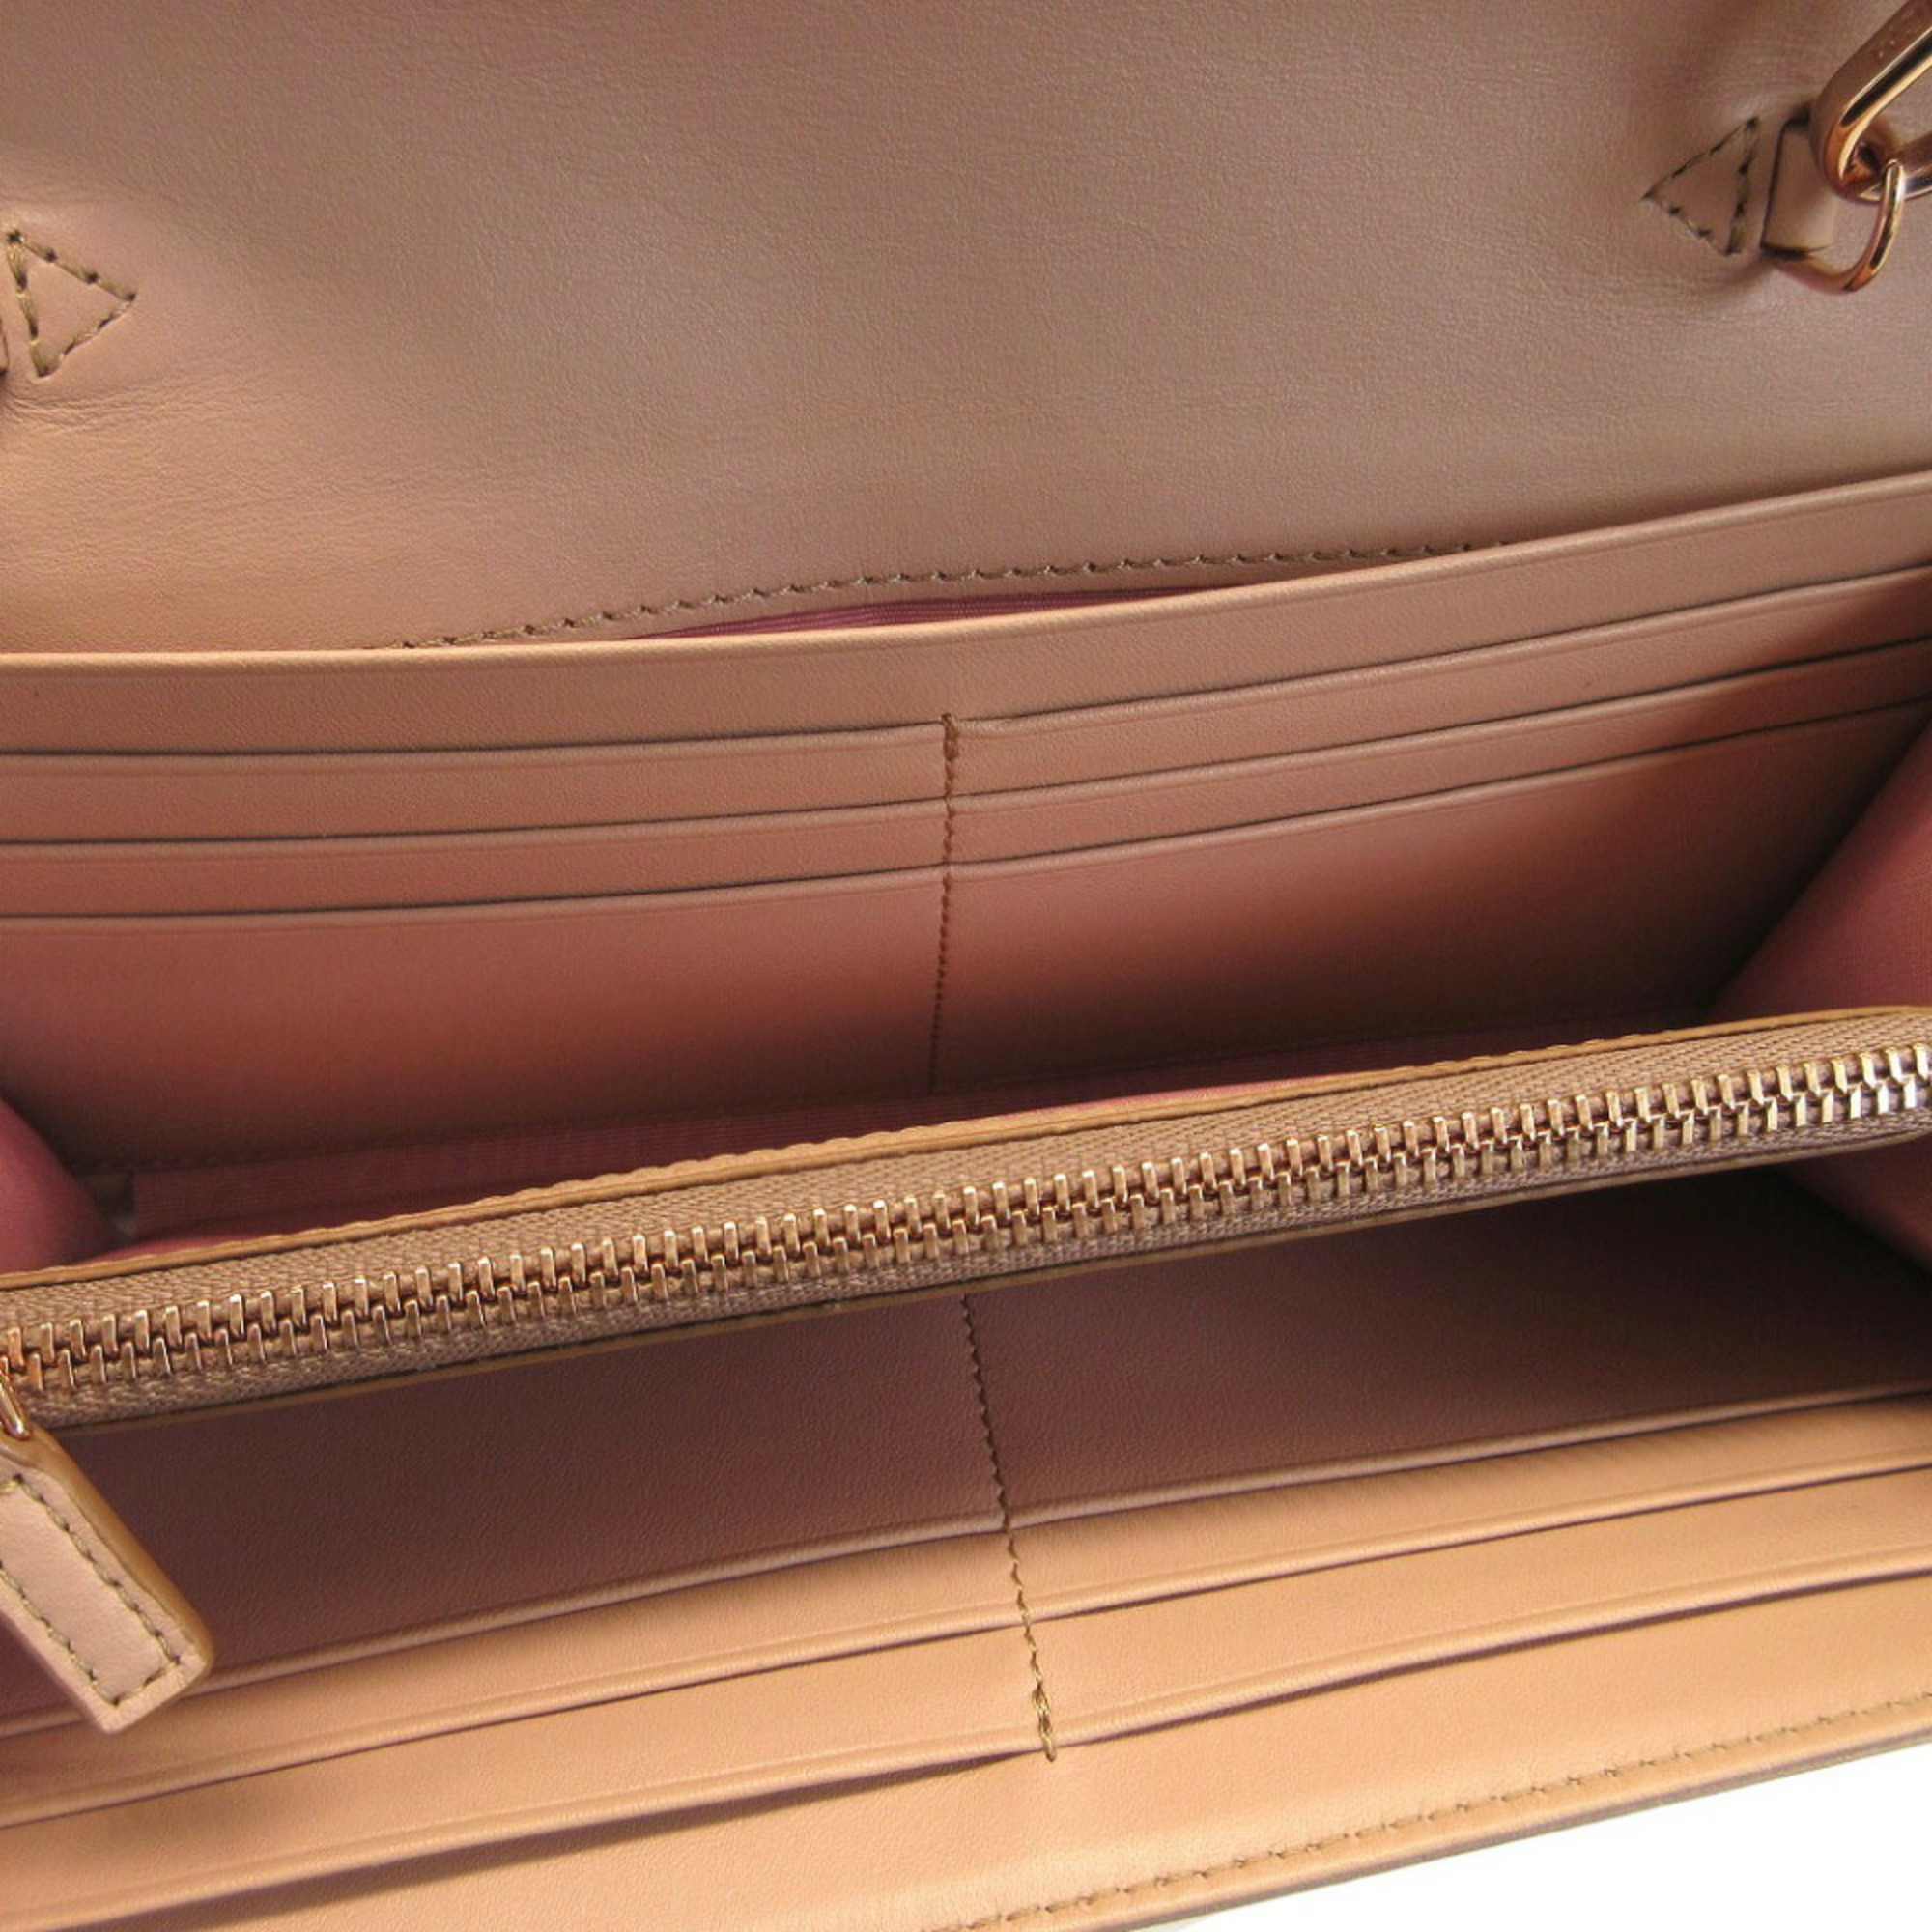 MCM 8APA11 Leather Champagne Gold Chain Shoulder Bag Long Wallet